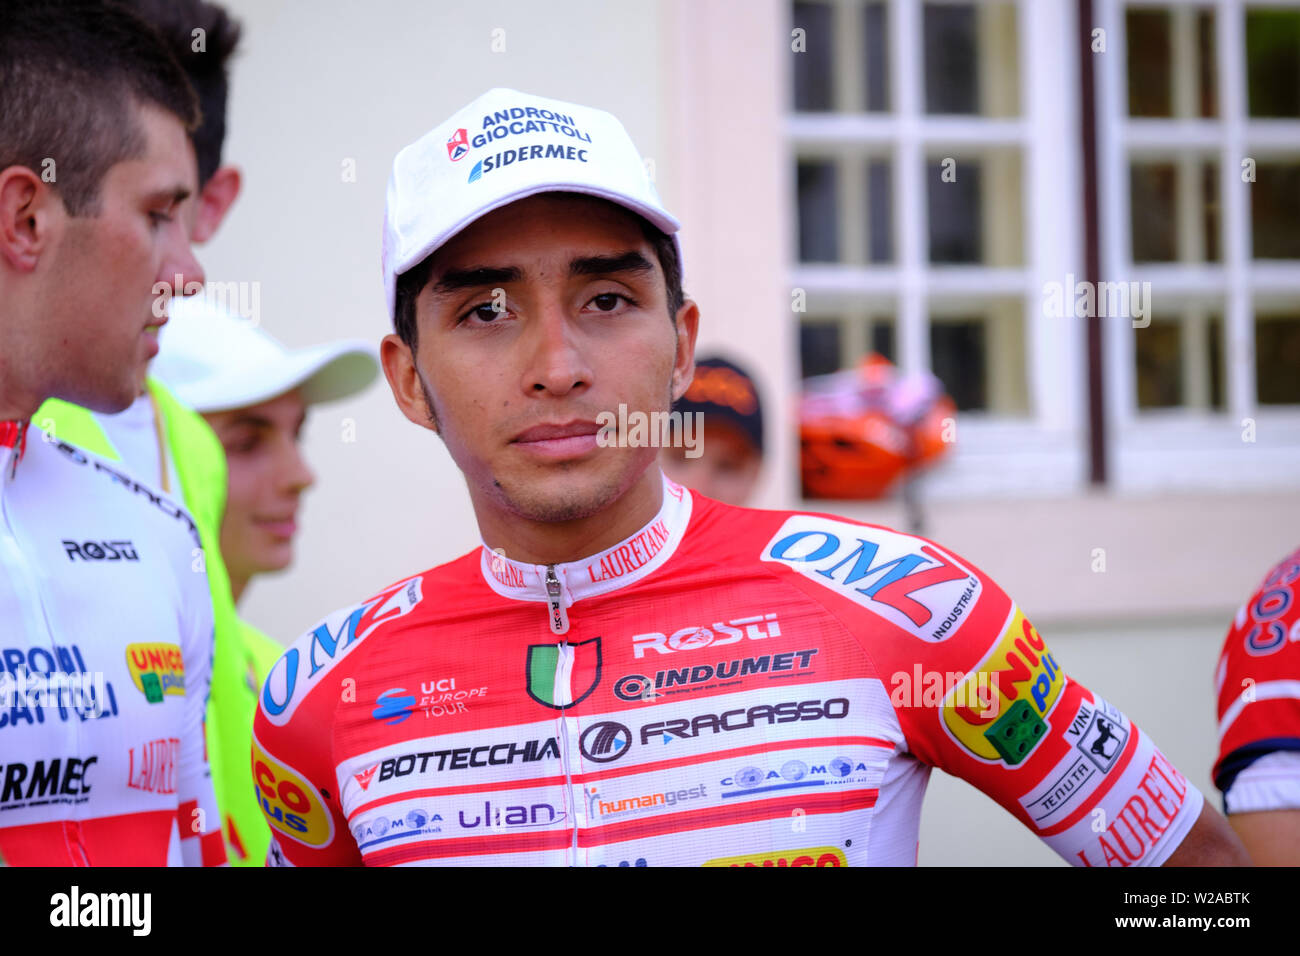 Cyclist Daniel Felipe Munoz Giraldo ( Team Androni Giocattoli- Sedermerc)  after finishing second in Sibiu Cycling Tour, July 7, 2019 Stock Photo -  Alamy